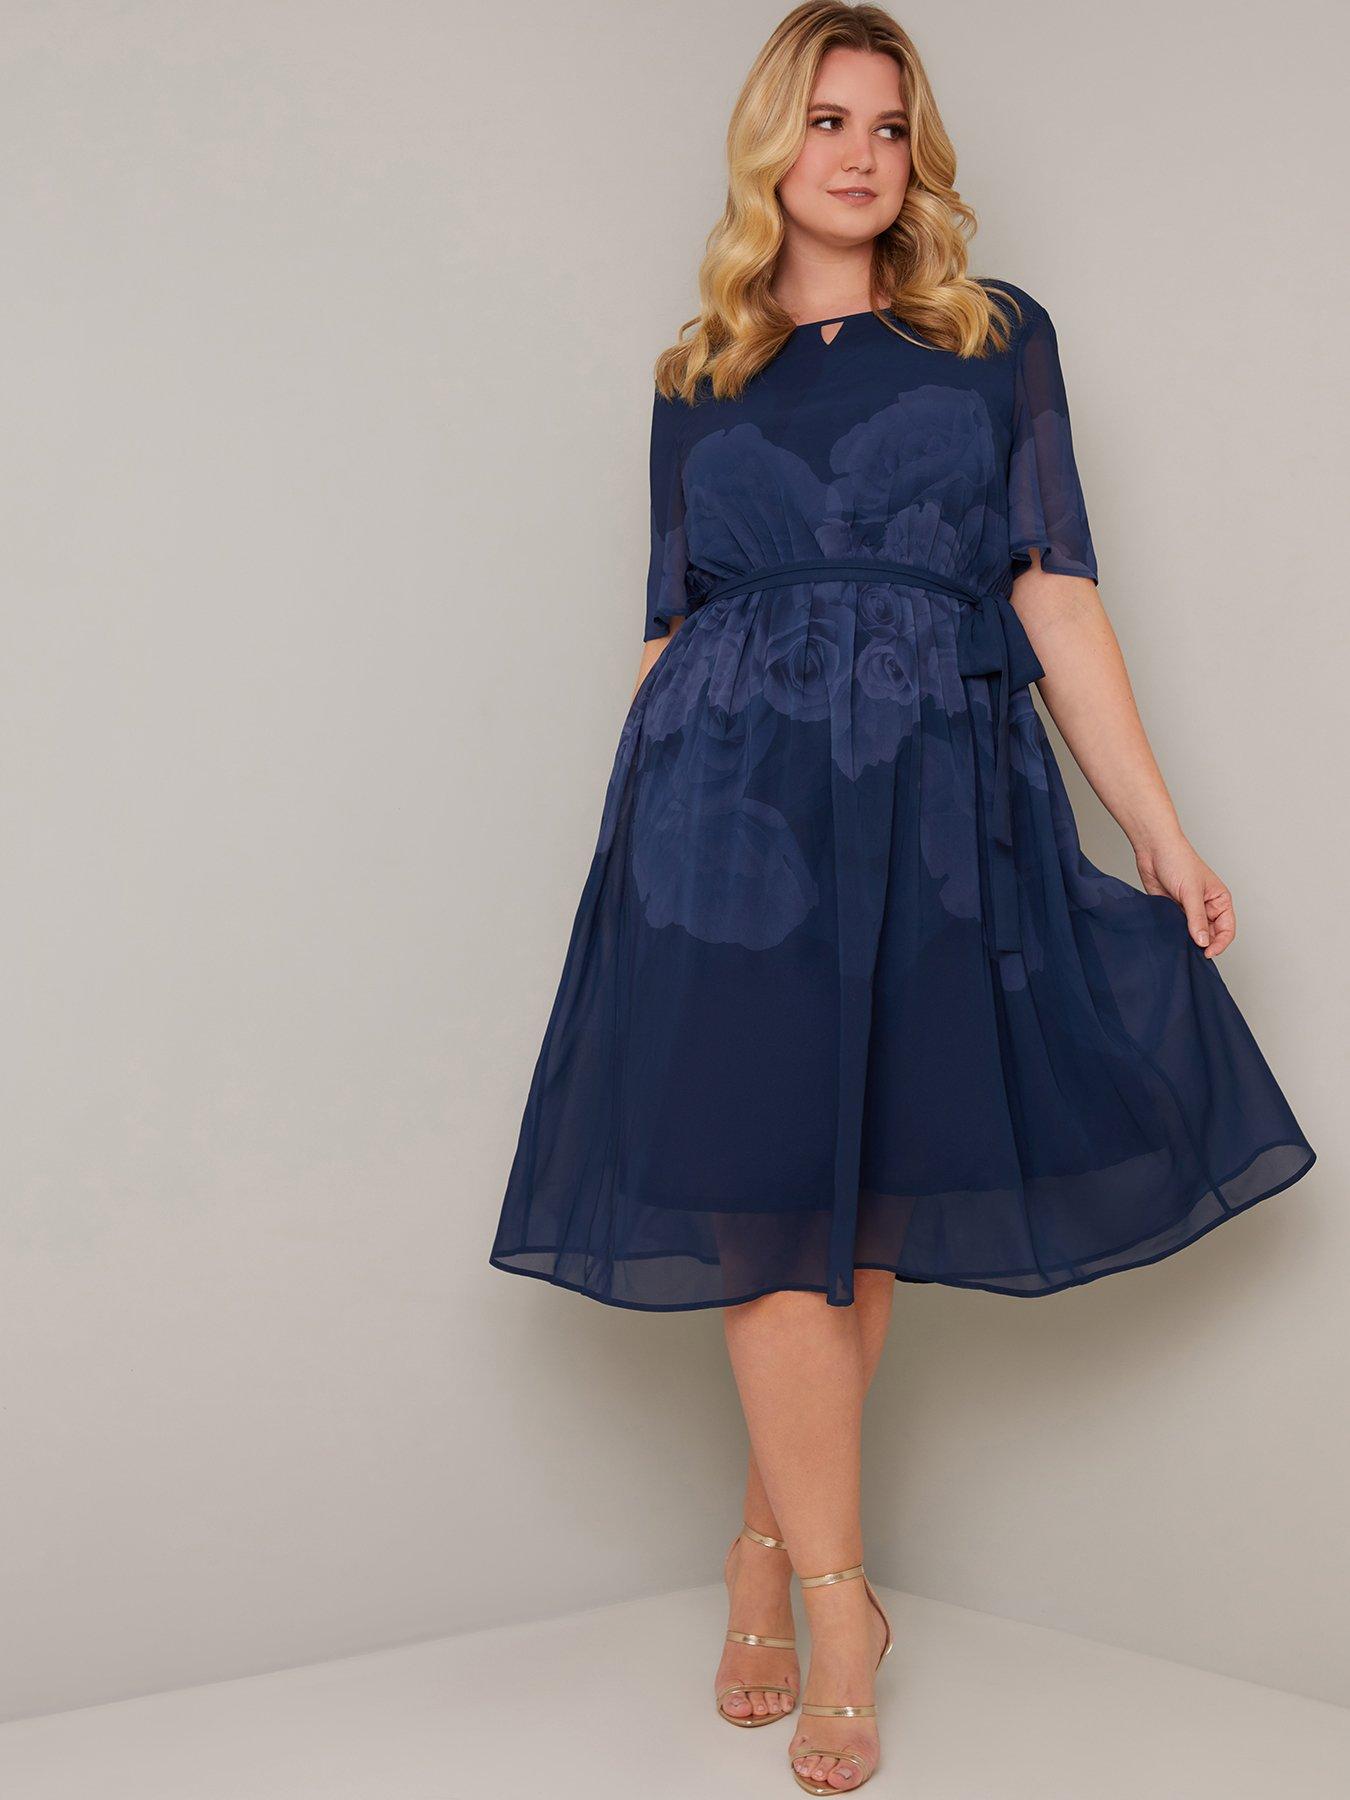 Forbigående Kemiker beundring Plus Size Peplum Dress Uk Online Sale, UP TO 60% OFF